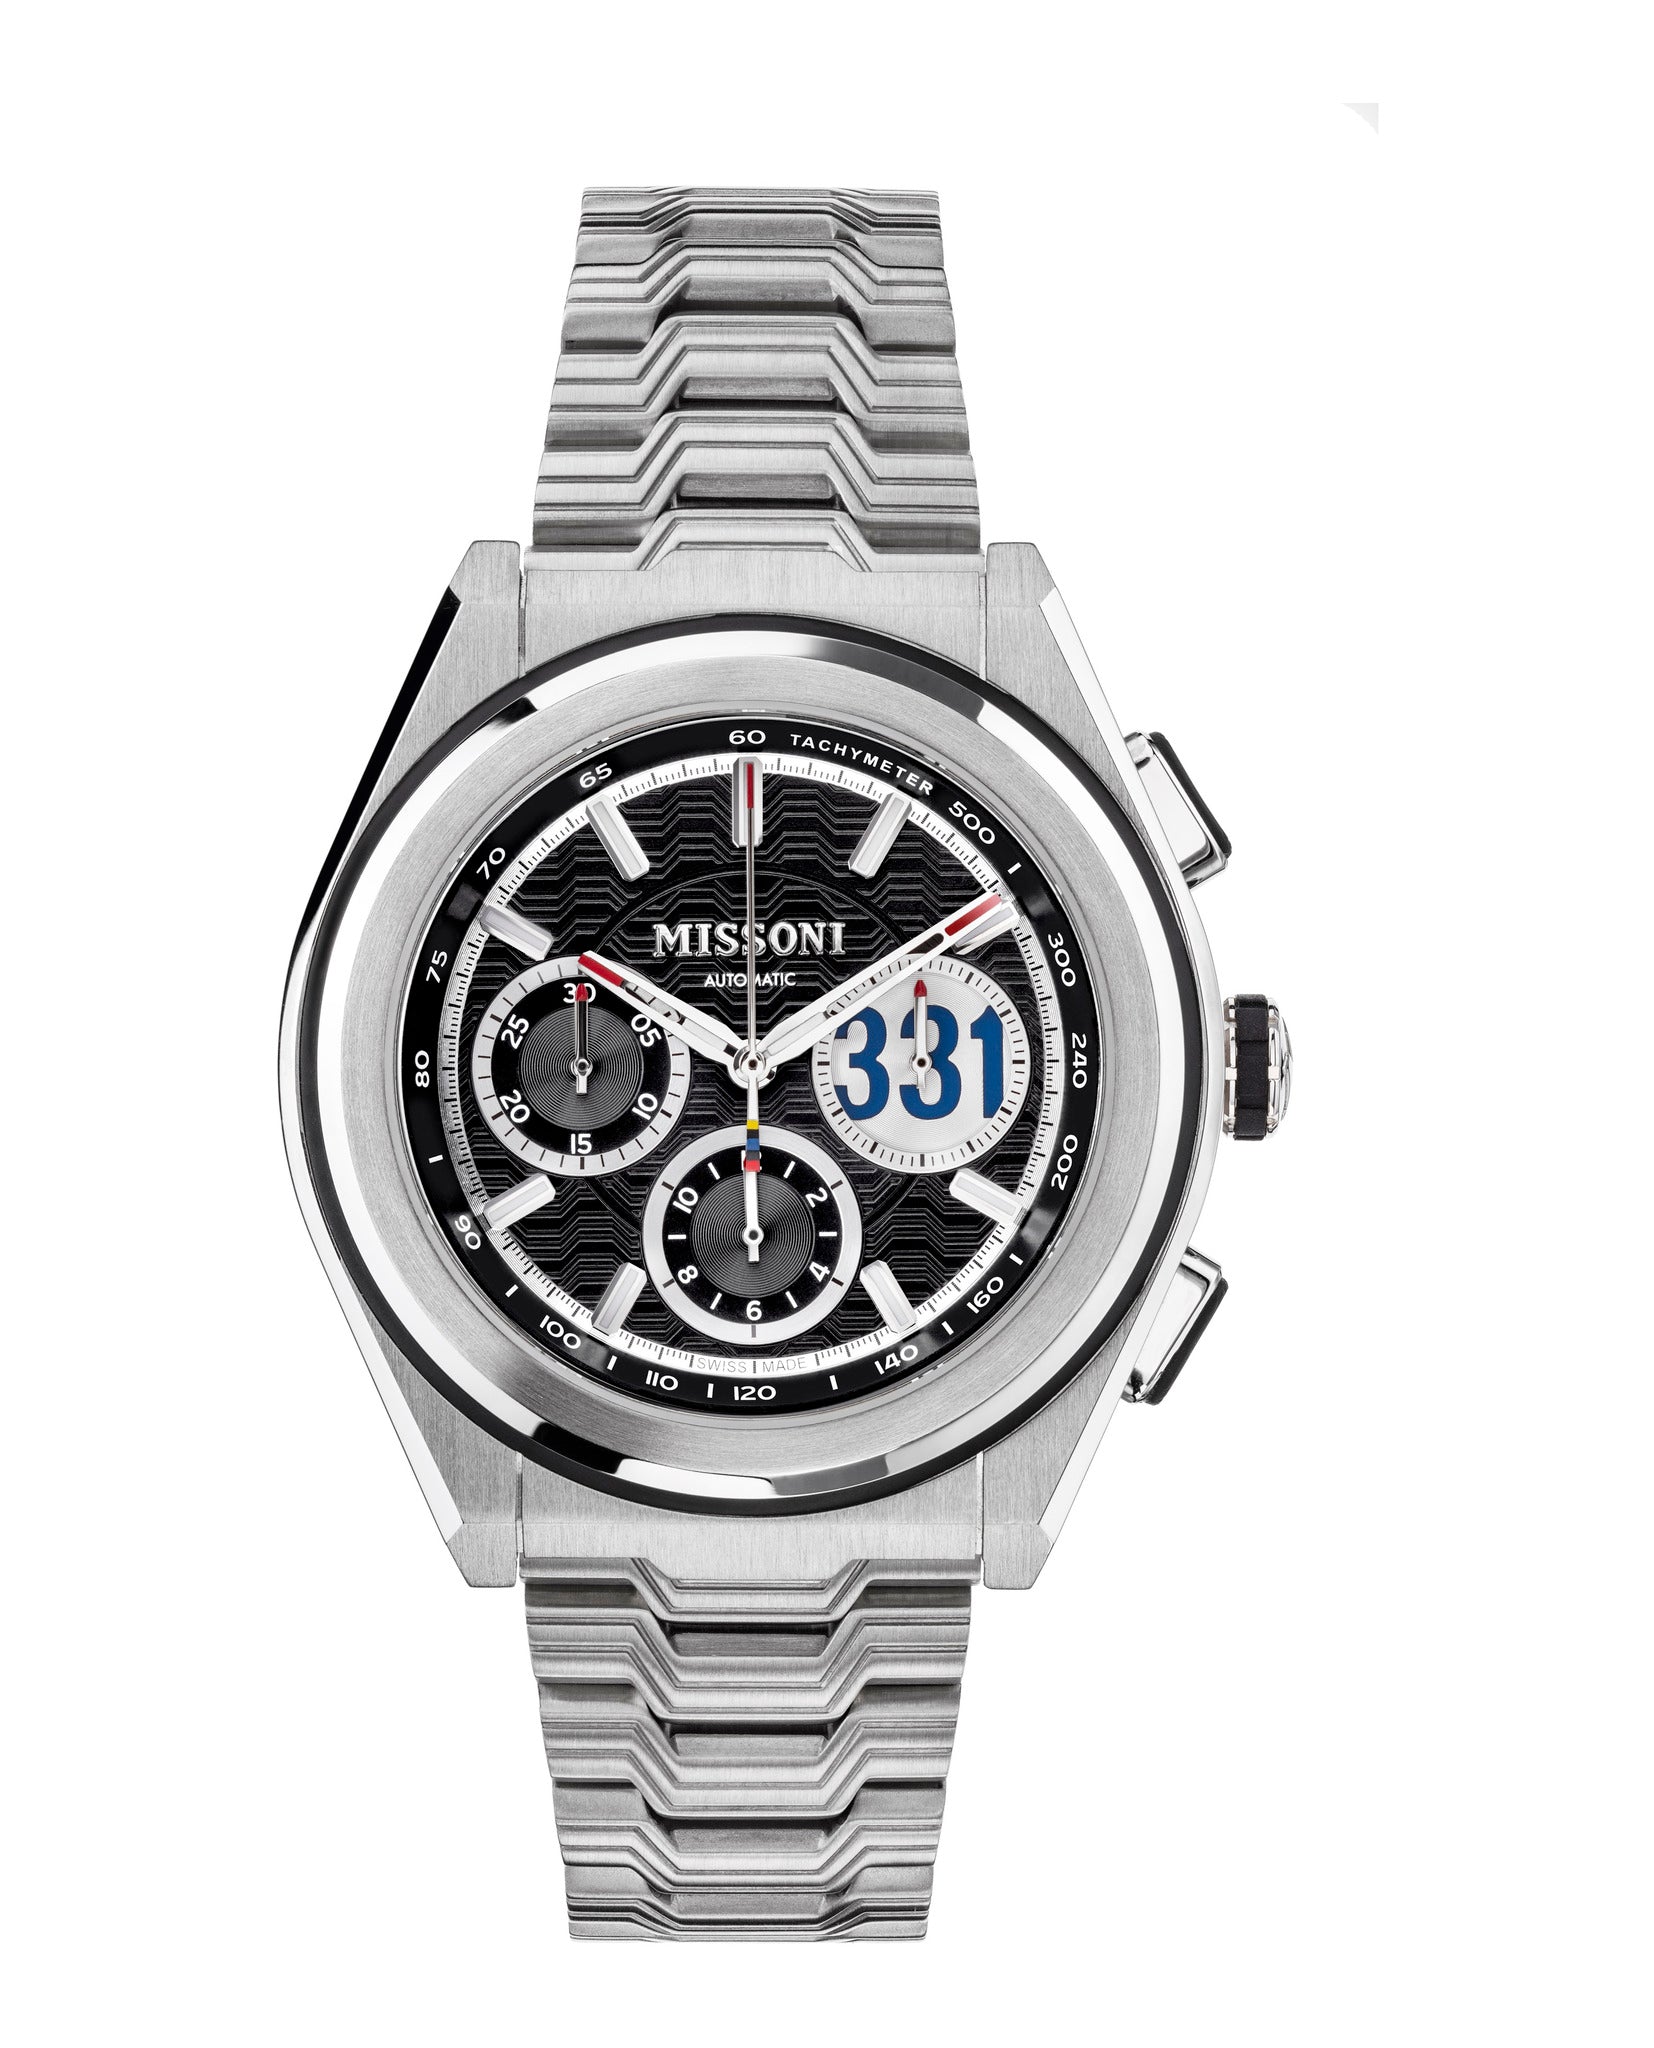 Missoni Missoni M331 Sportwear Limited Edition Automatic Watch